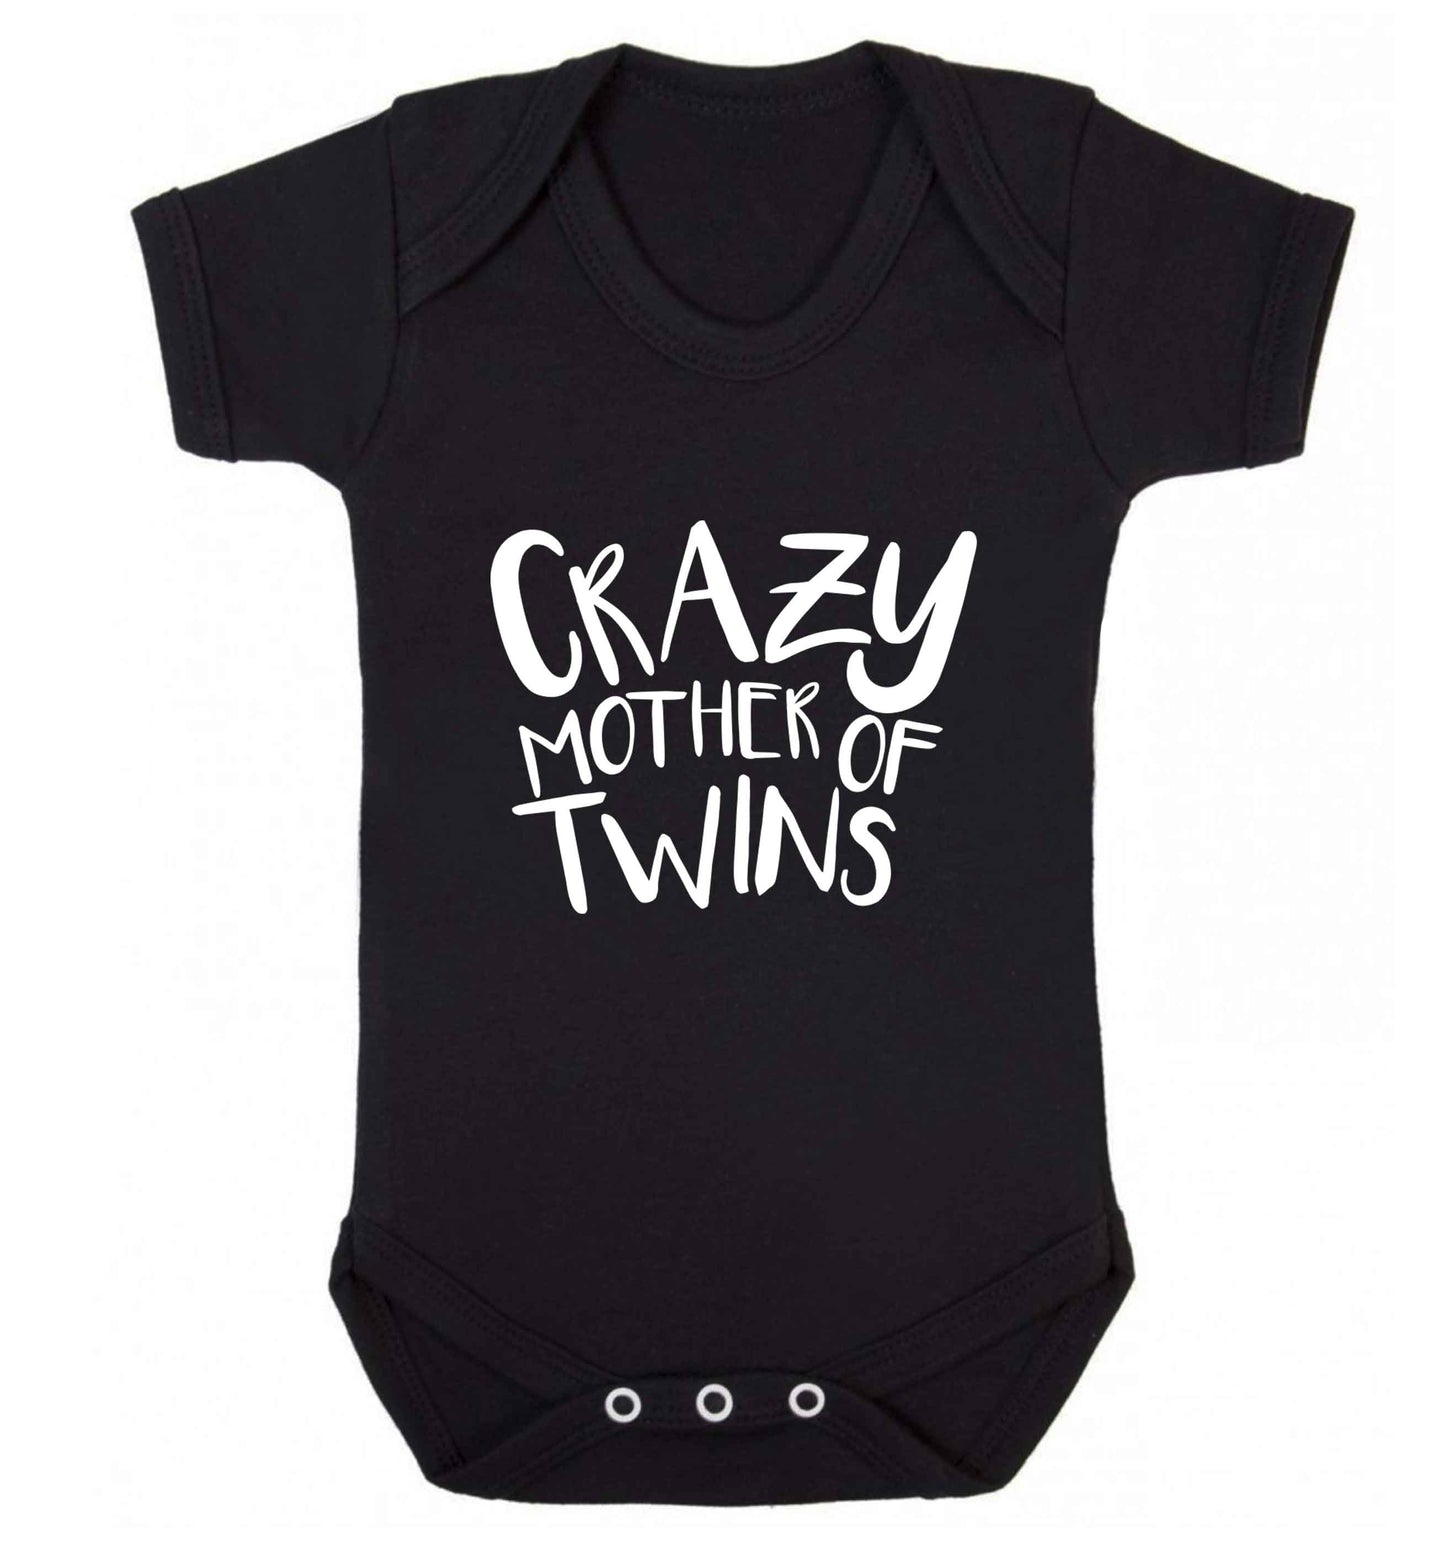 Crazy mother of twins baby vest black 18-24 months